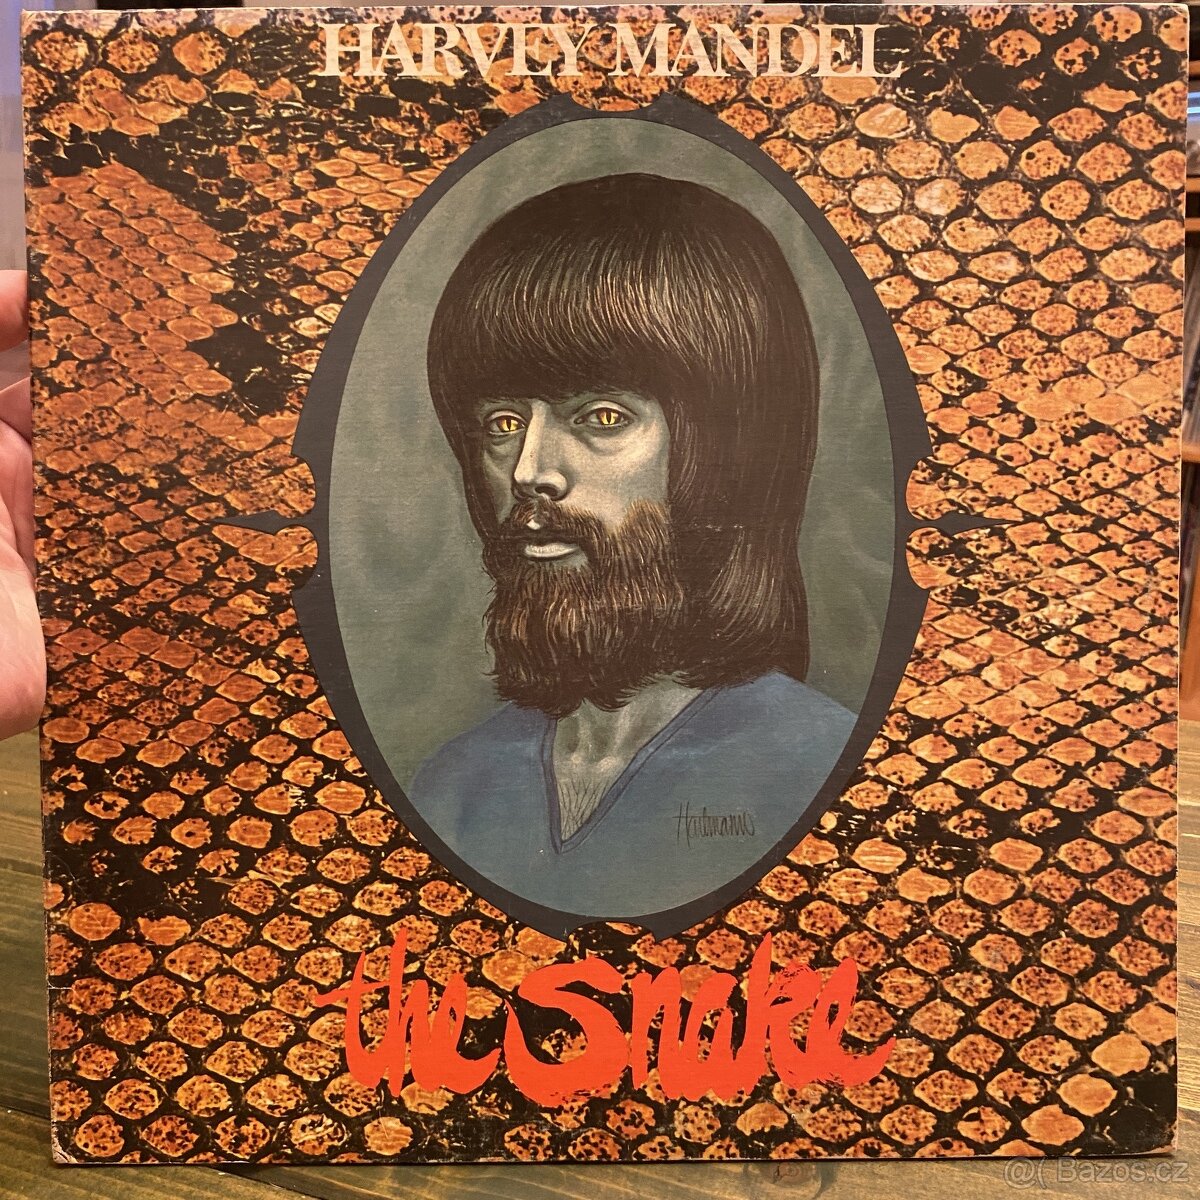 Harvey Mandel – The Snake. LP